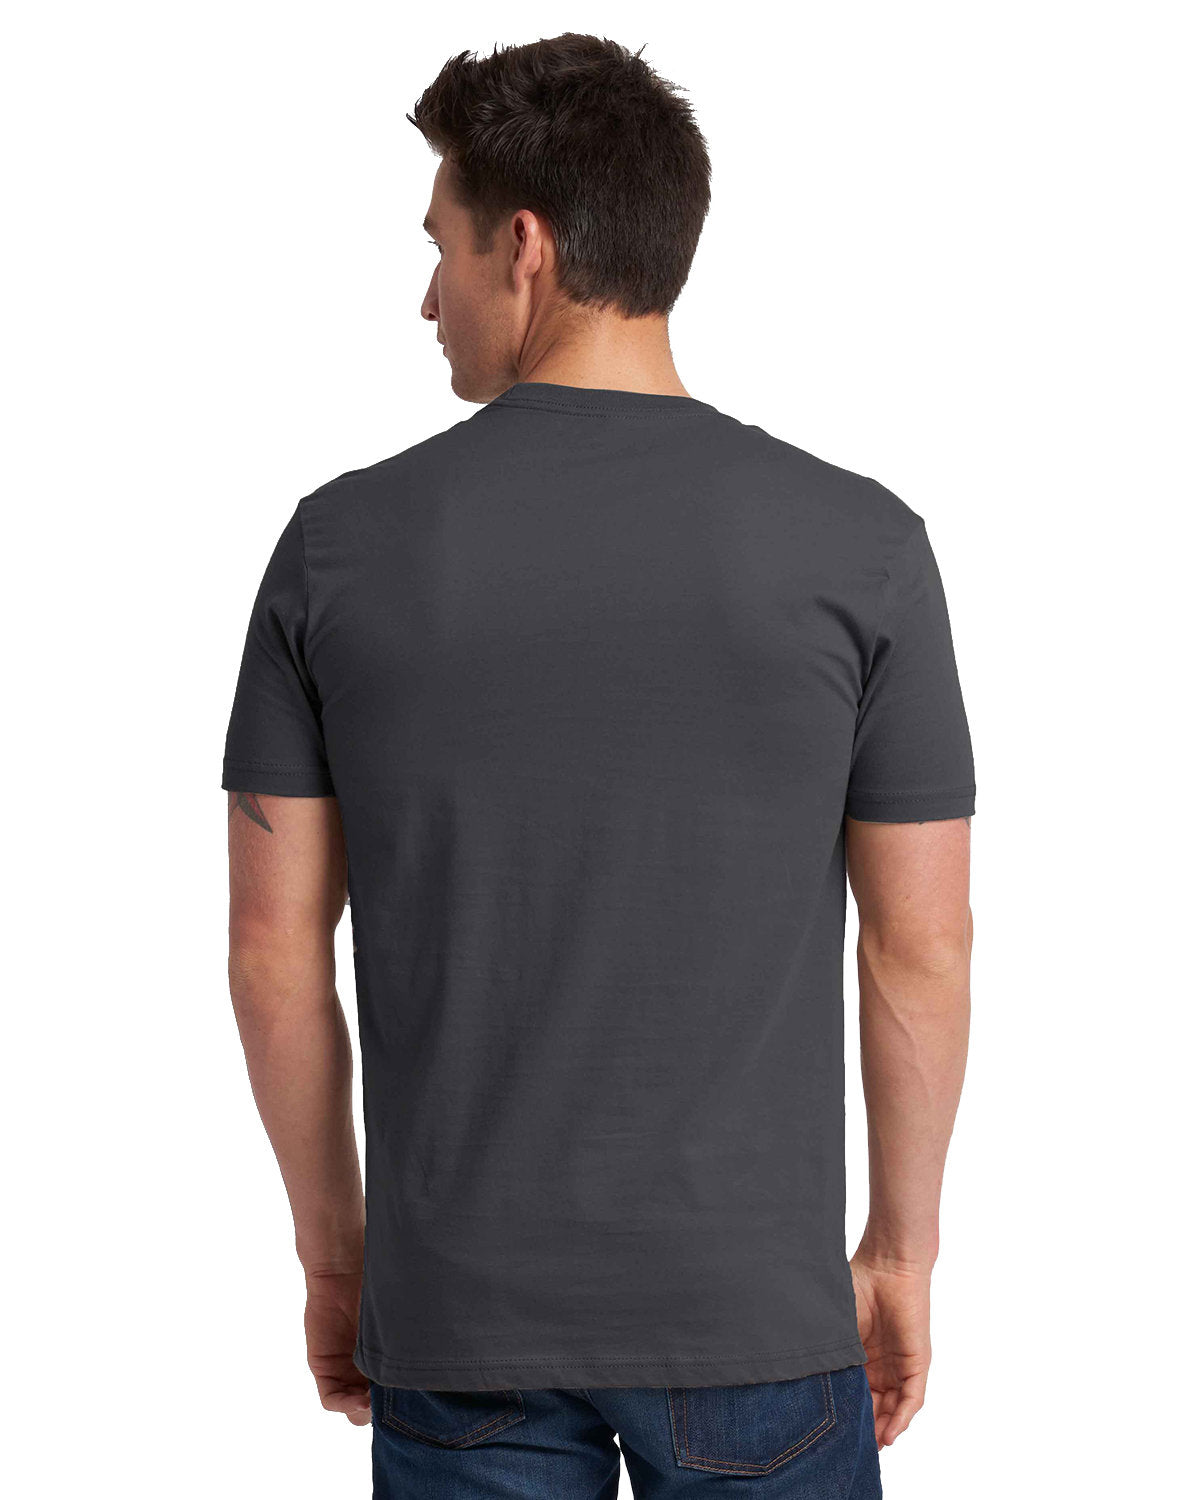 Next Level 3600 Unisex Cotton T Shirt - Heather Gray - 6XL